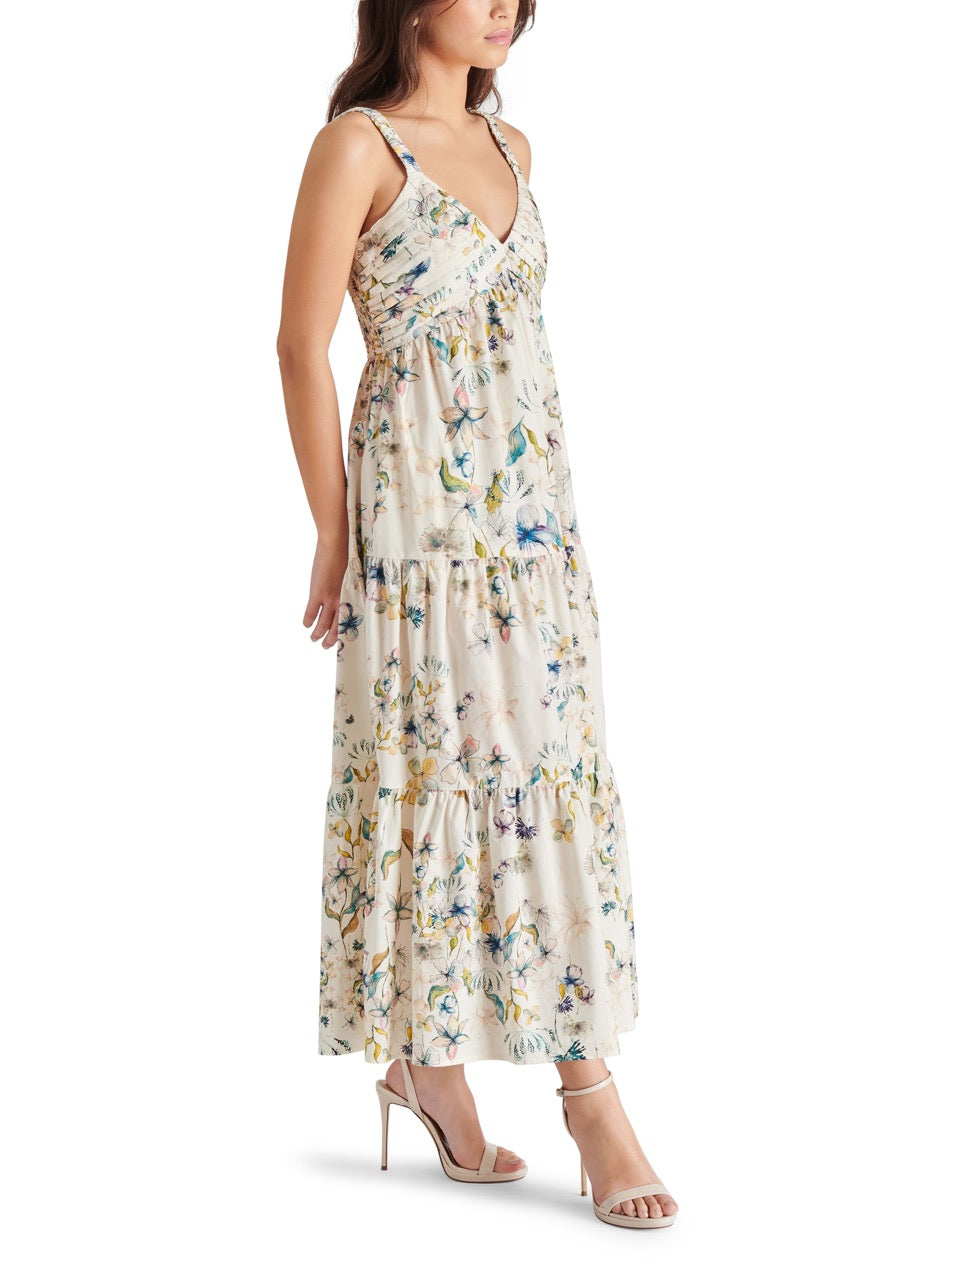 steve madden eliora floral sleeveless maxi dress in cream-side